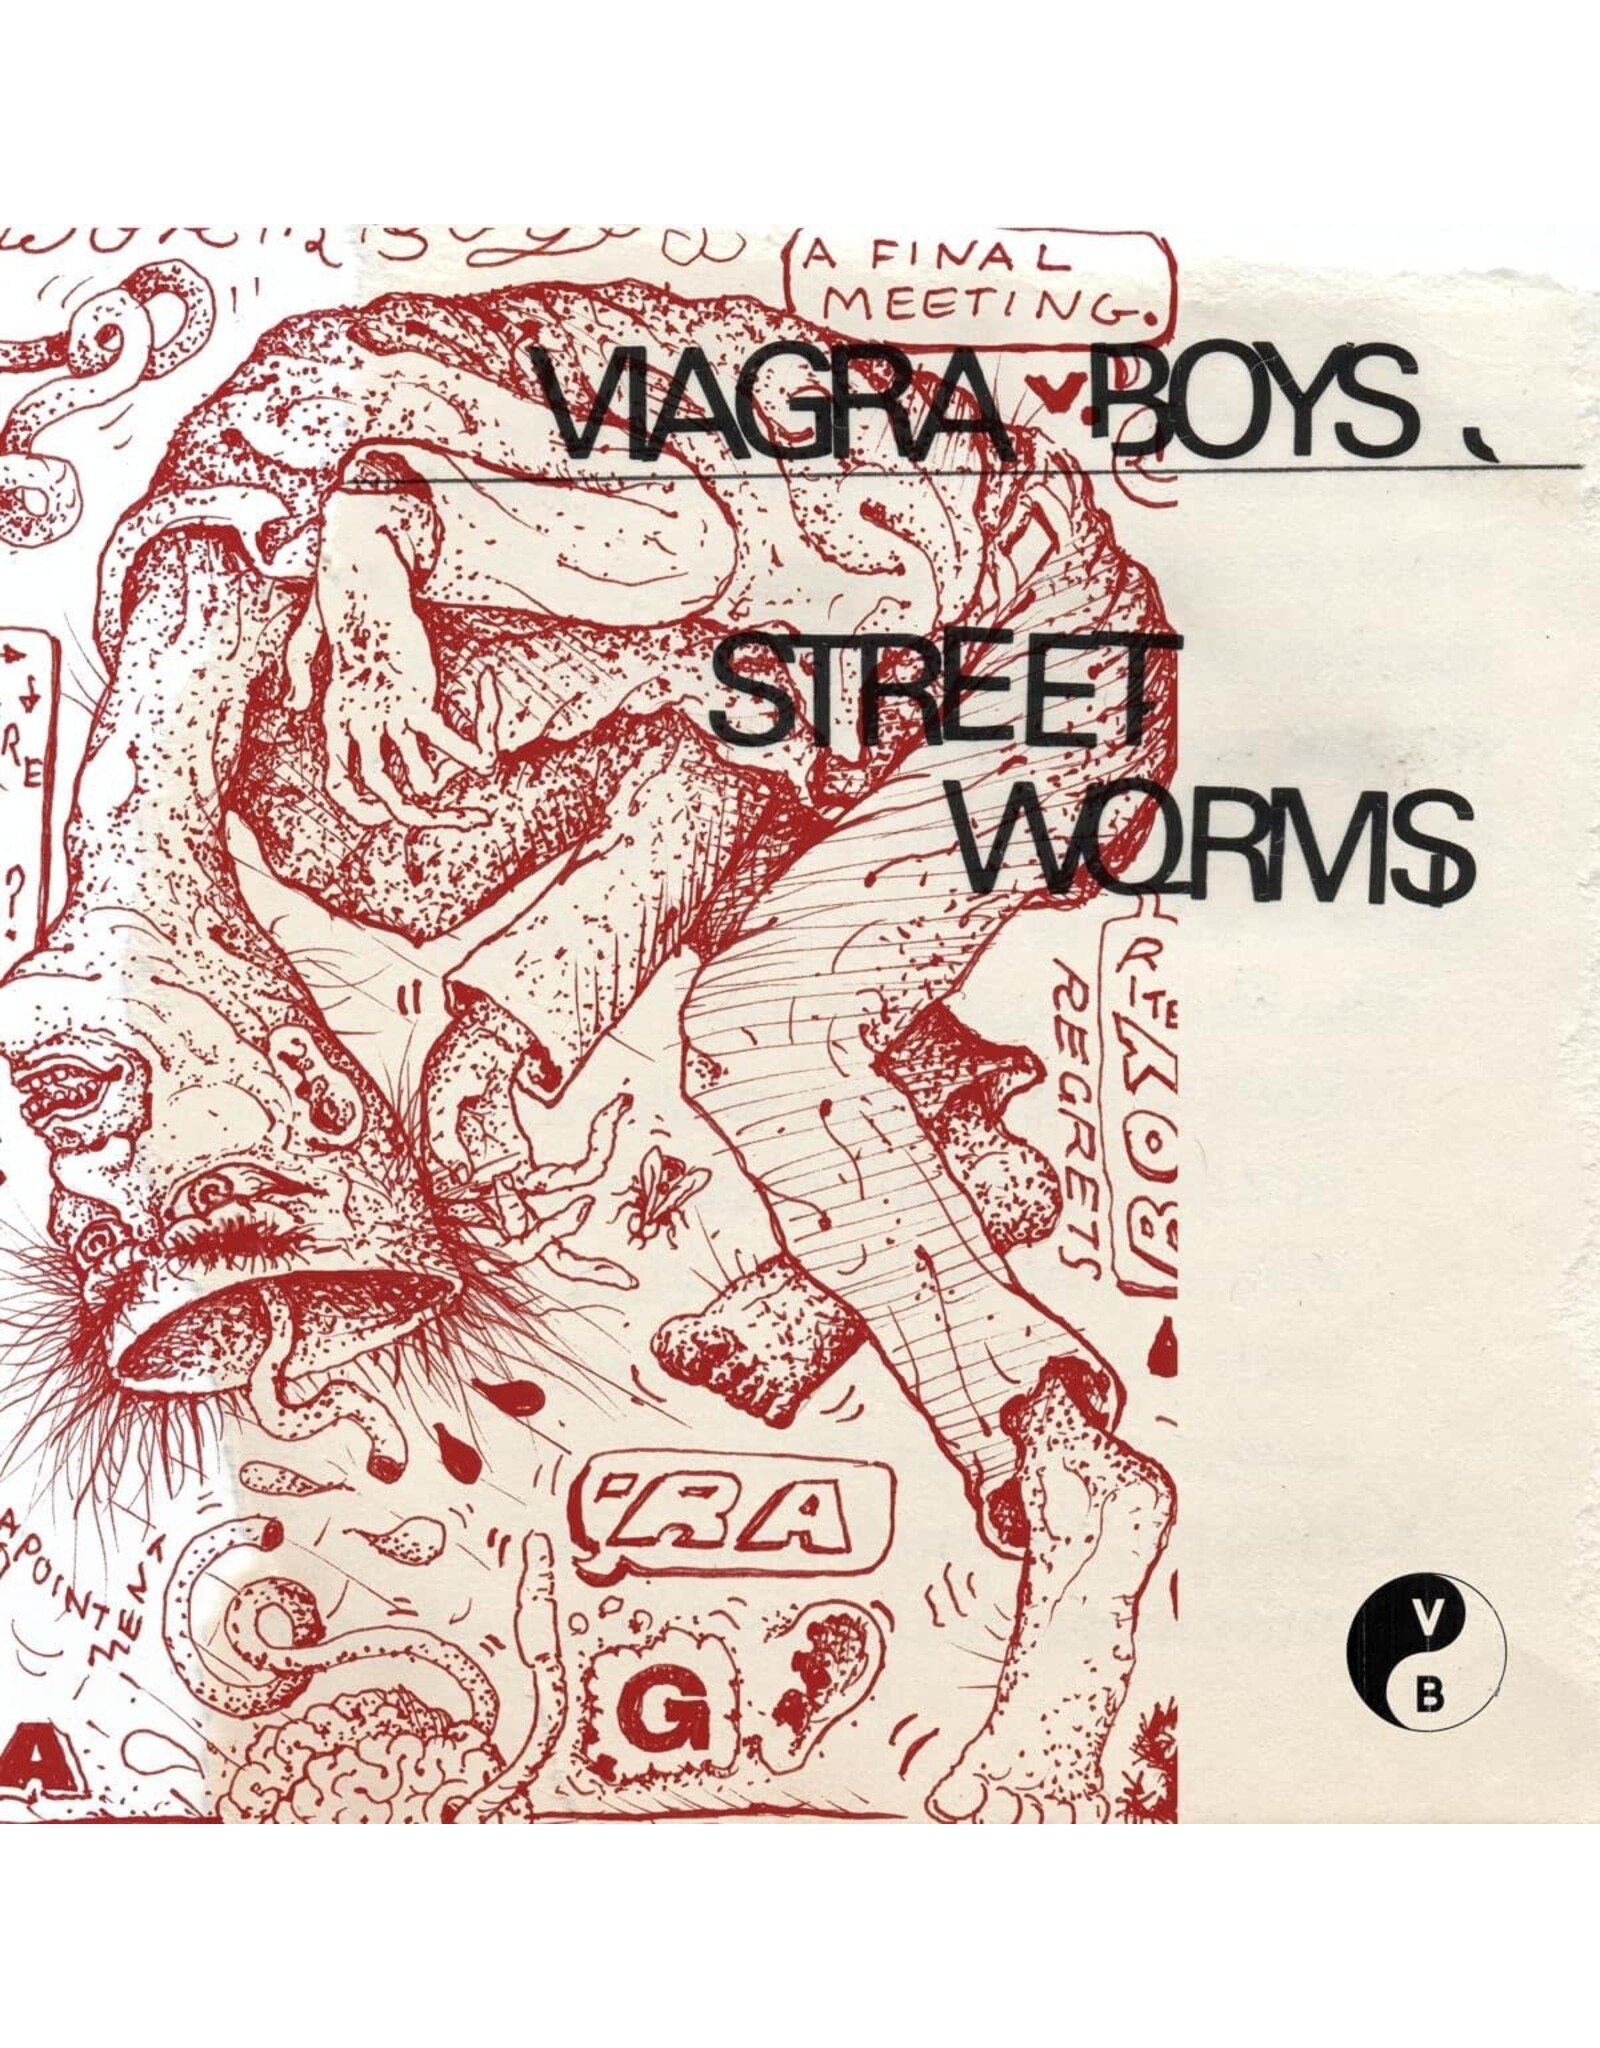 Viagra Boys - Street Worms (Clear Vinyl)